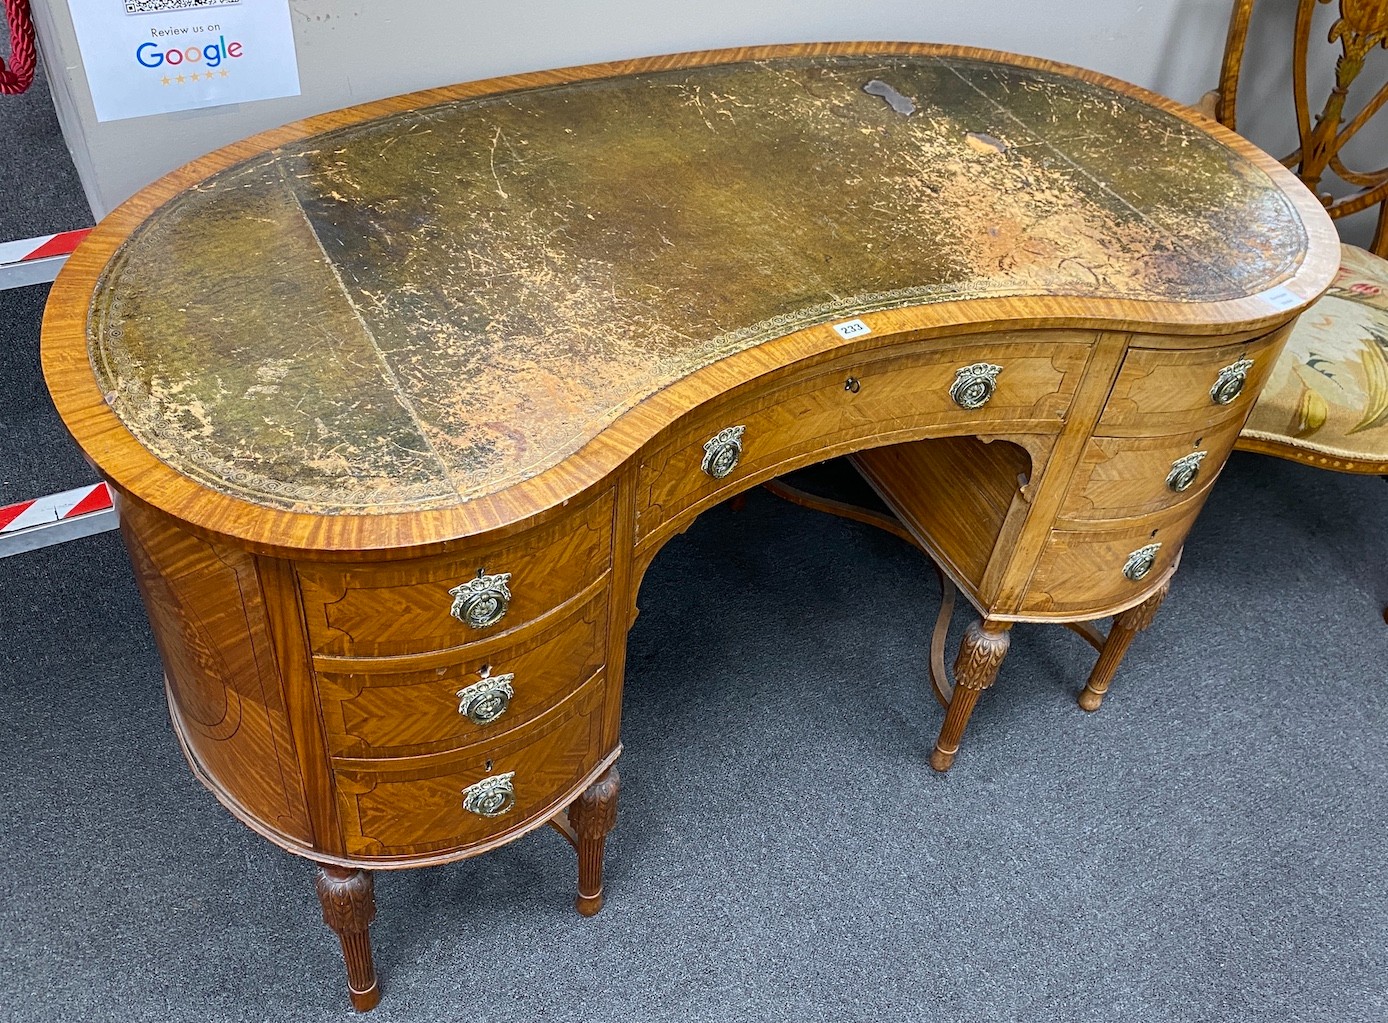 An Edwardian inlaid satinwood kidney shaped kneehole writing desk, width 138cm, depth 71cm, height 80cm